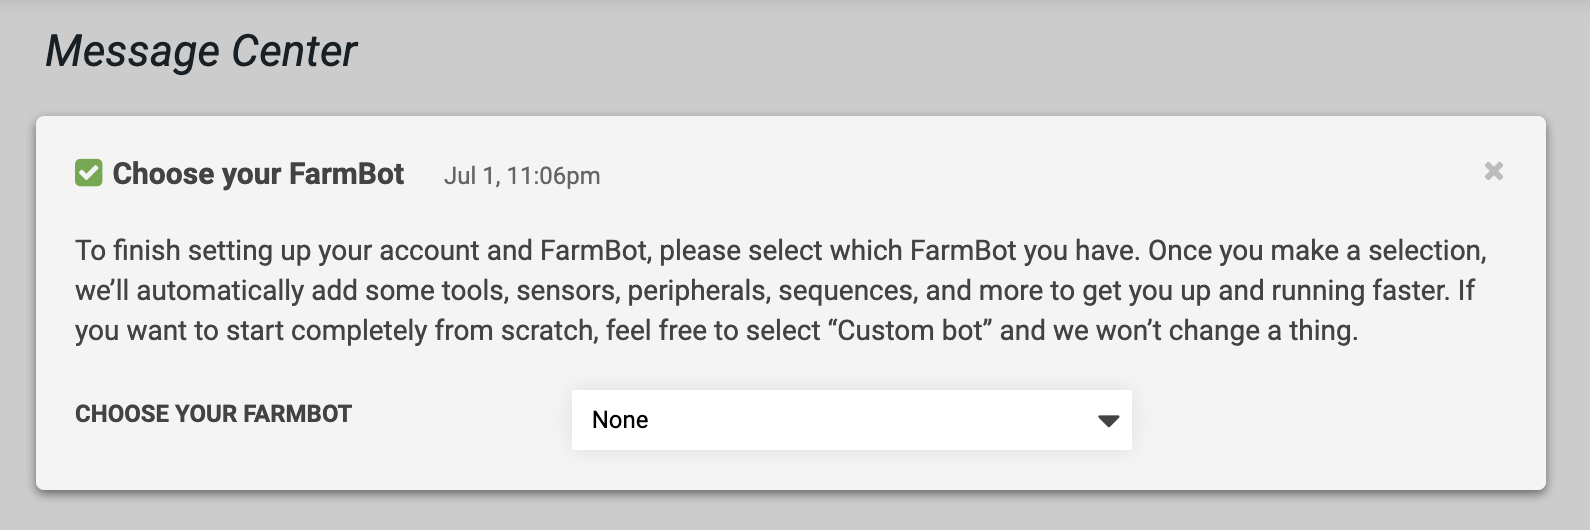 choose your farmbot